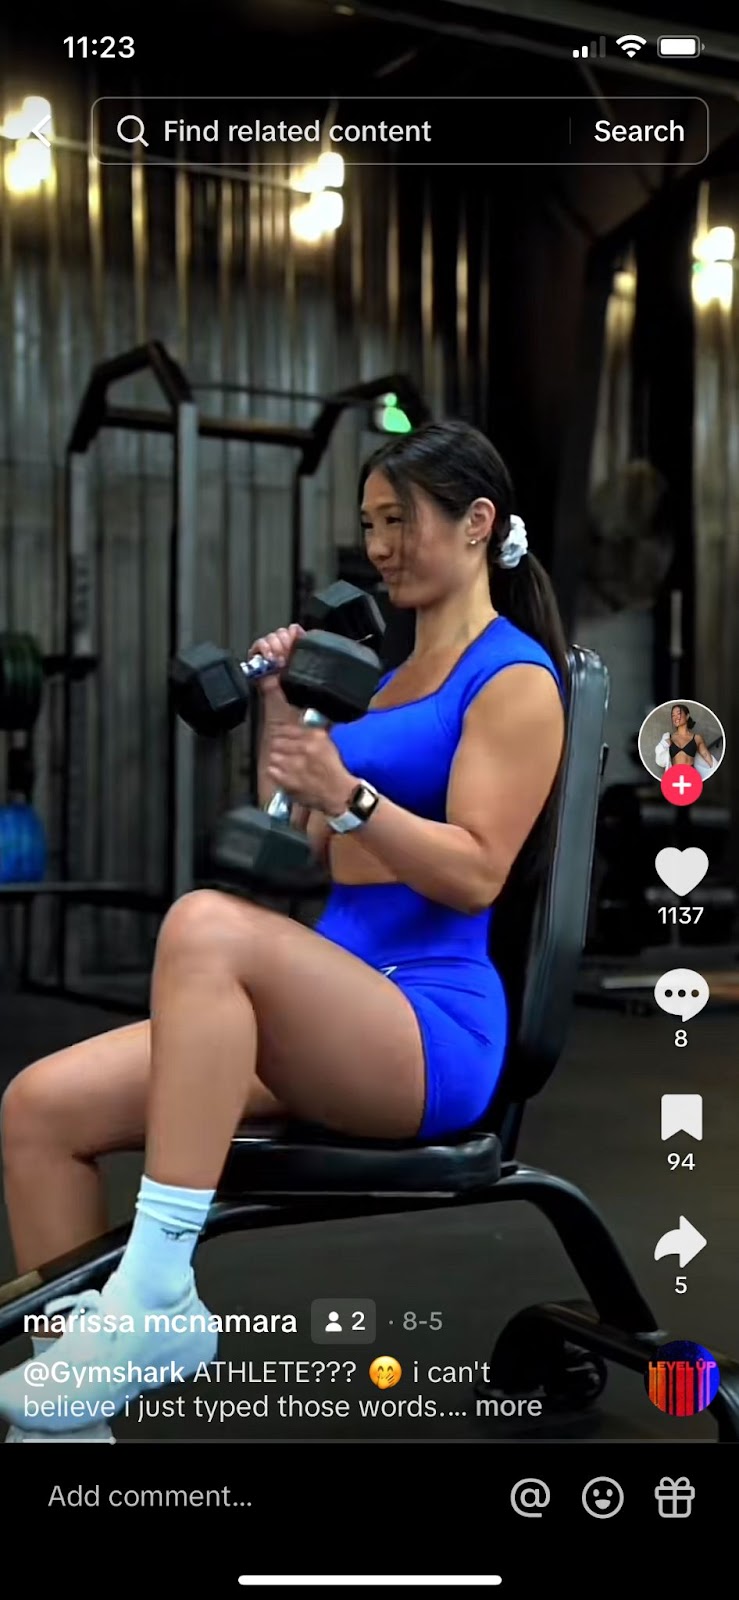 Marissa McNamara's TikTok video from the gym wearing Gymshark¡s product